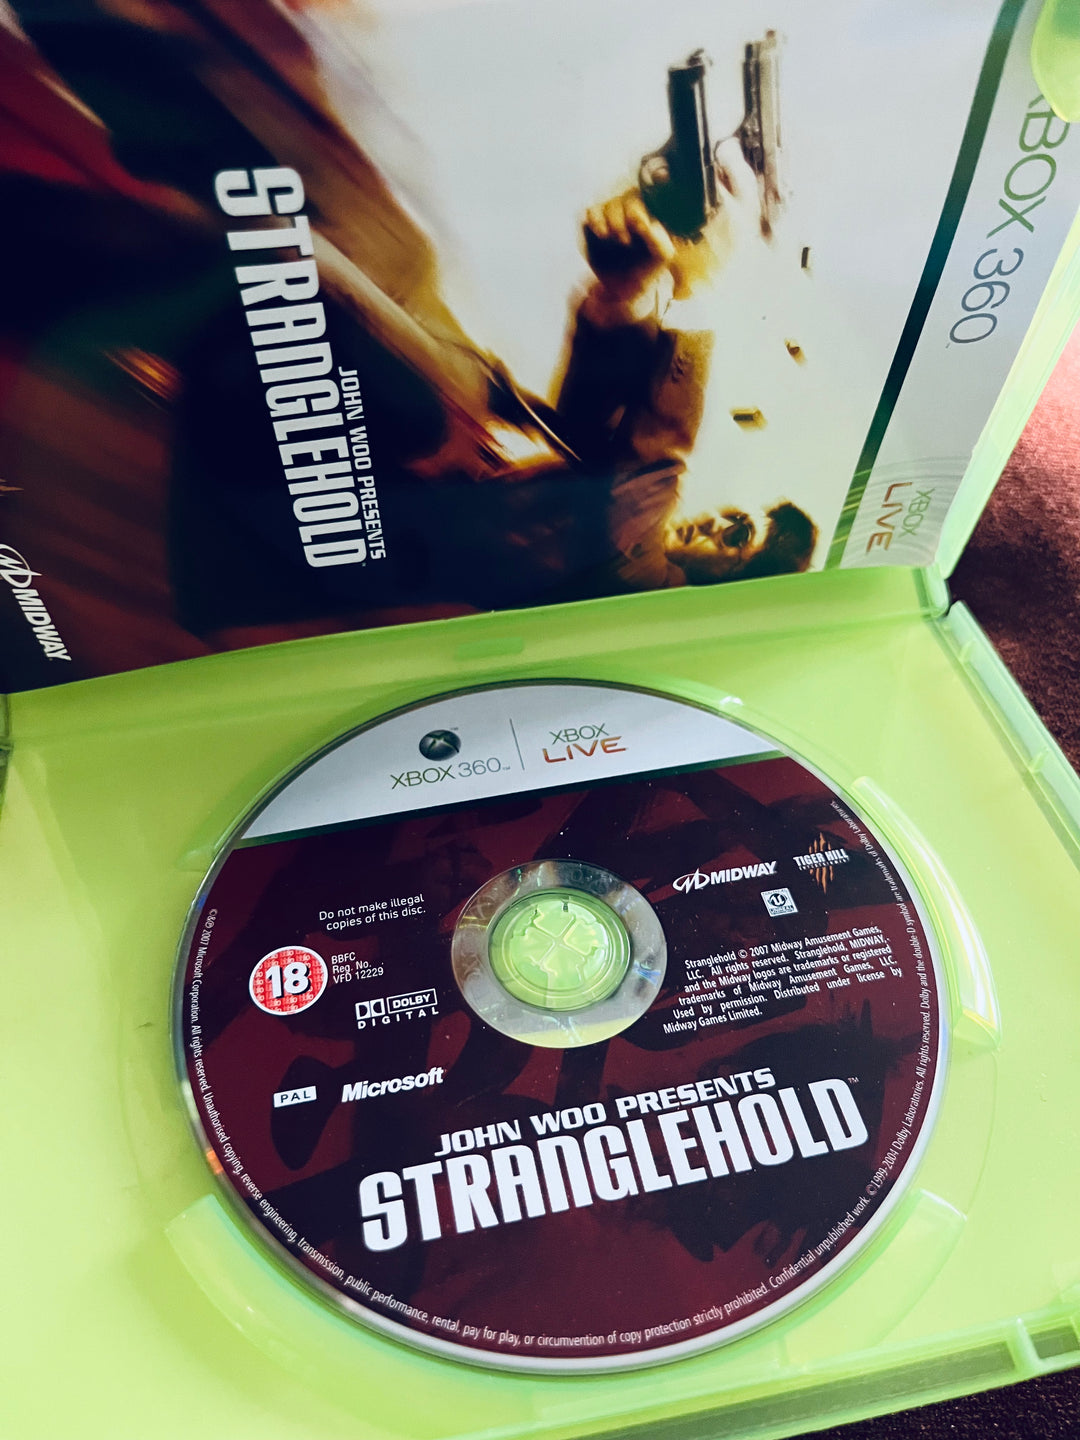 Stranglehold. Xbox 360.